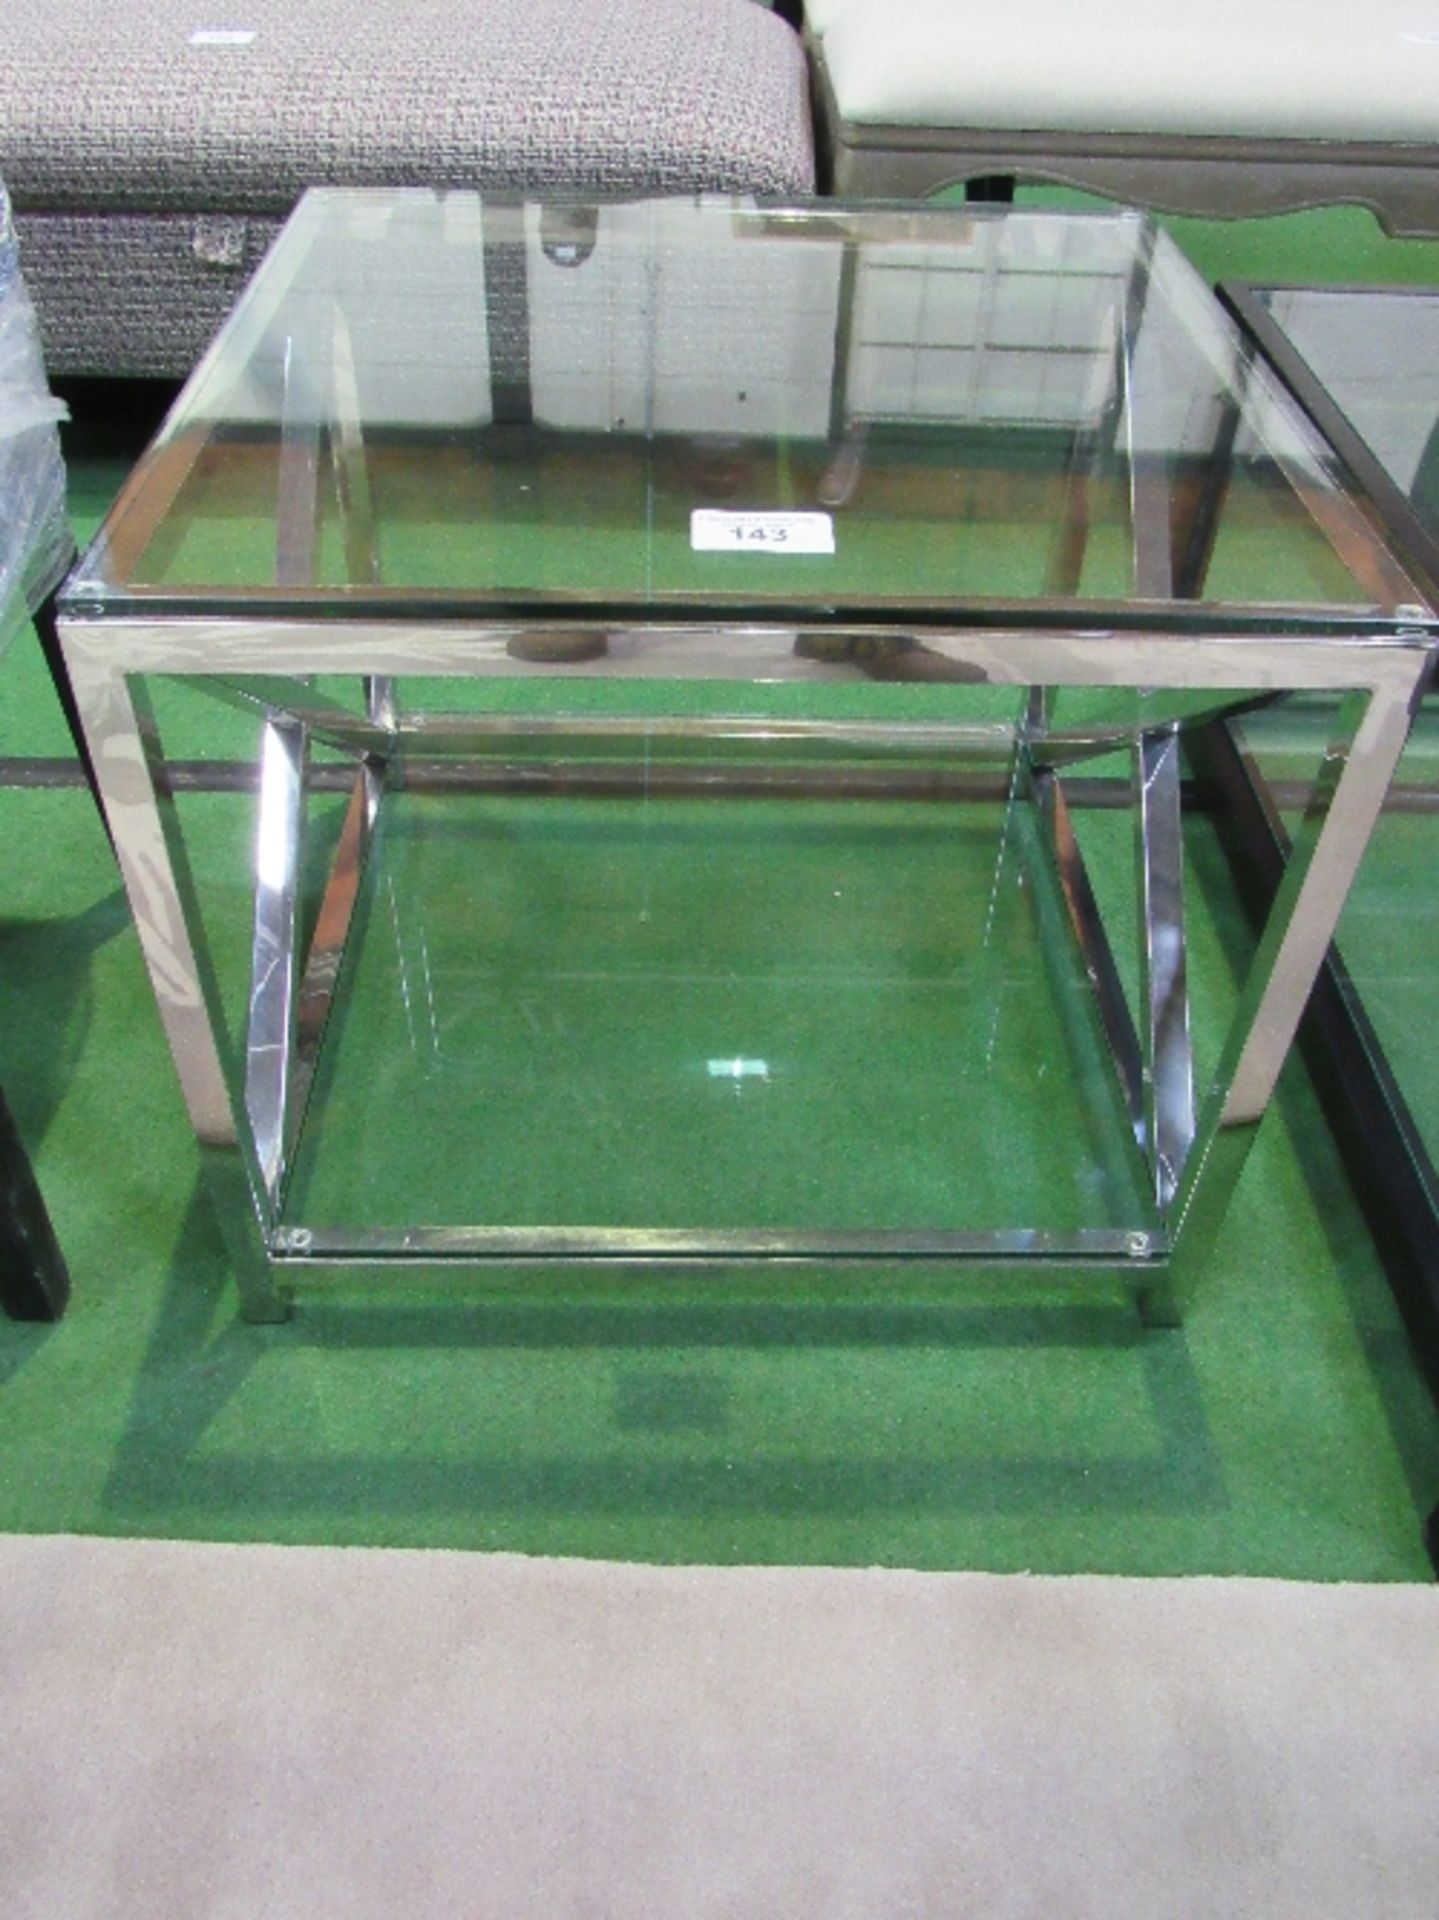 Glass & chrome low table with glass shelf beneath, 24" x 24" x 20" high